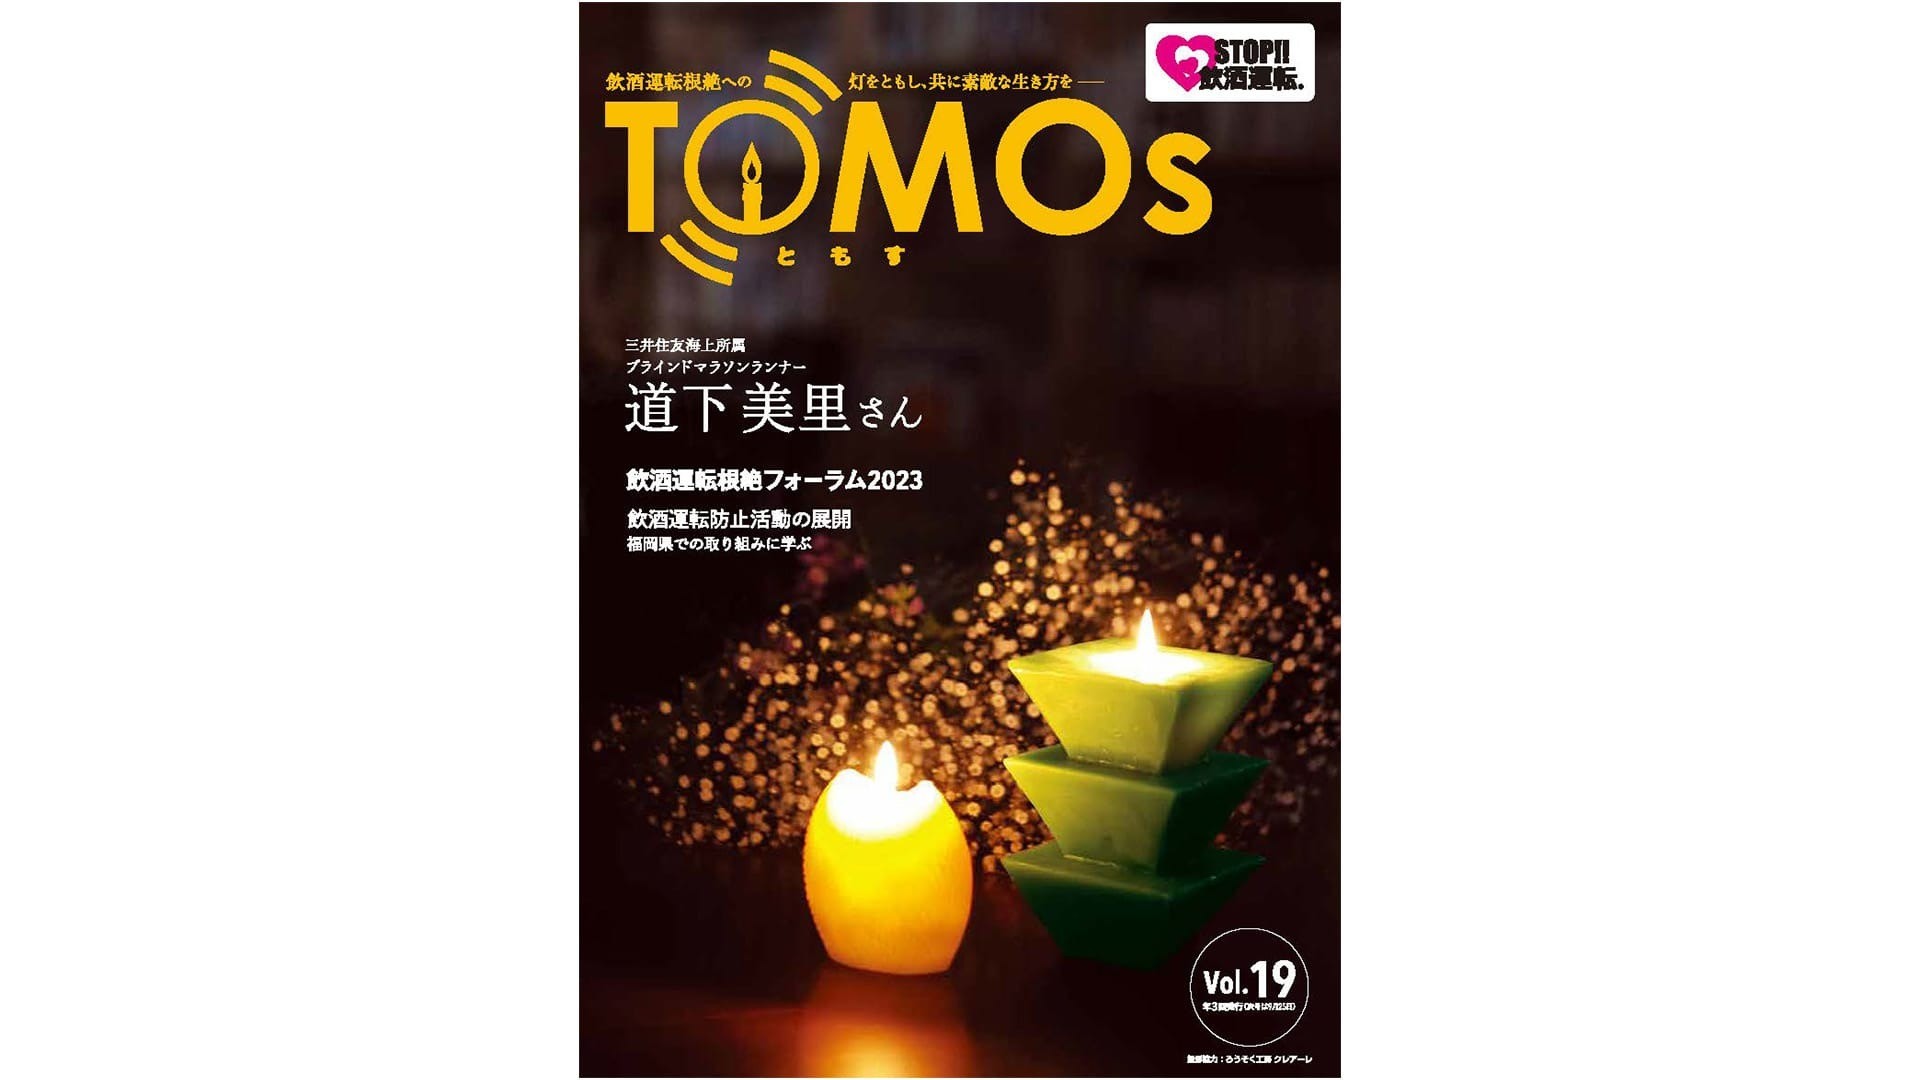 TOMOs vol.19 三井住友海上所属 ブラインドマラソンランナー道下美里さんインタビュー